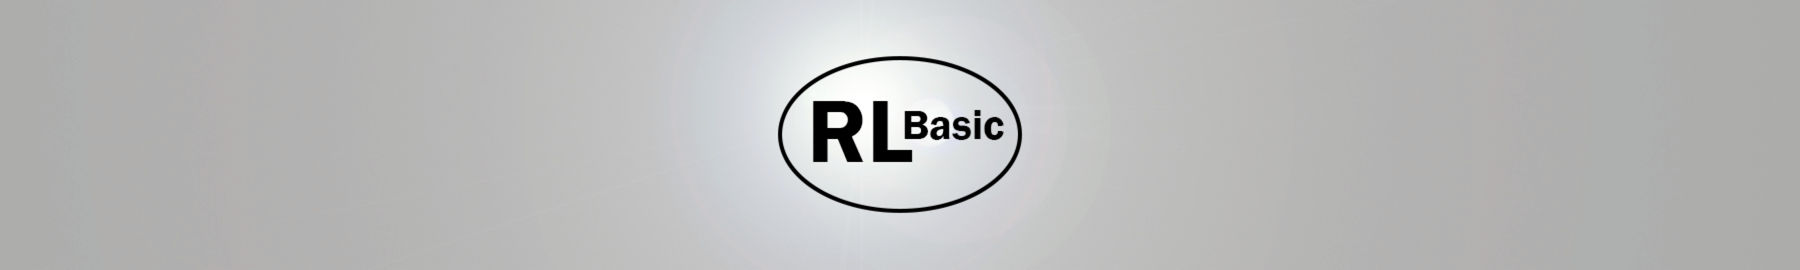 RLBasic